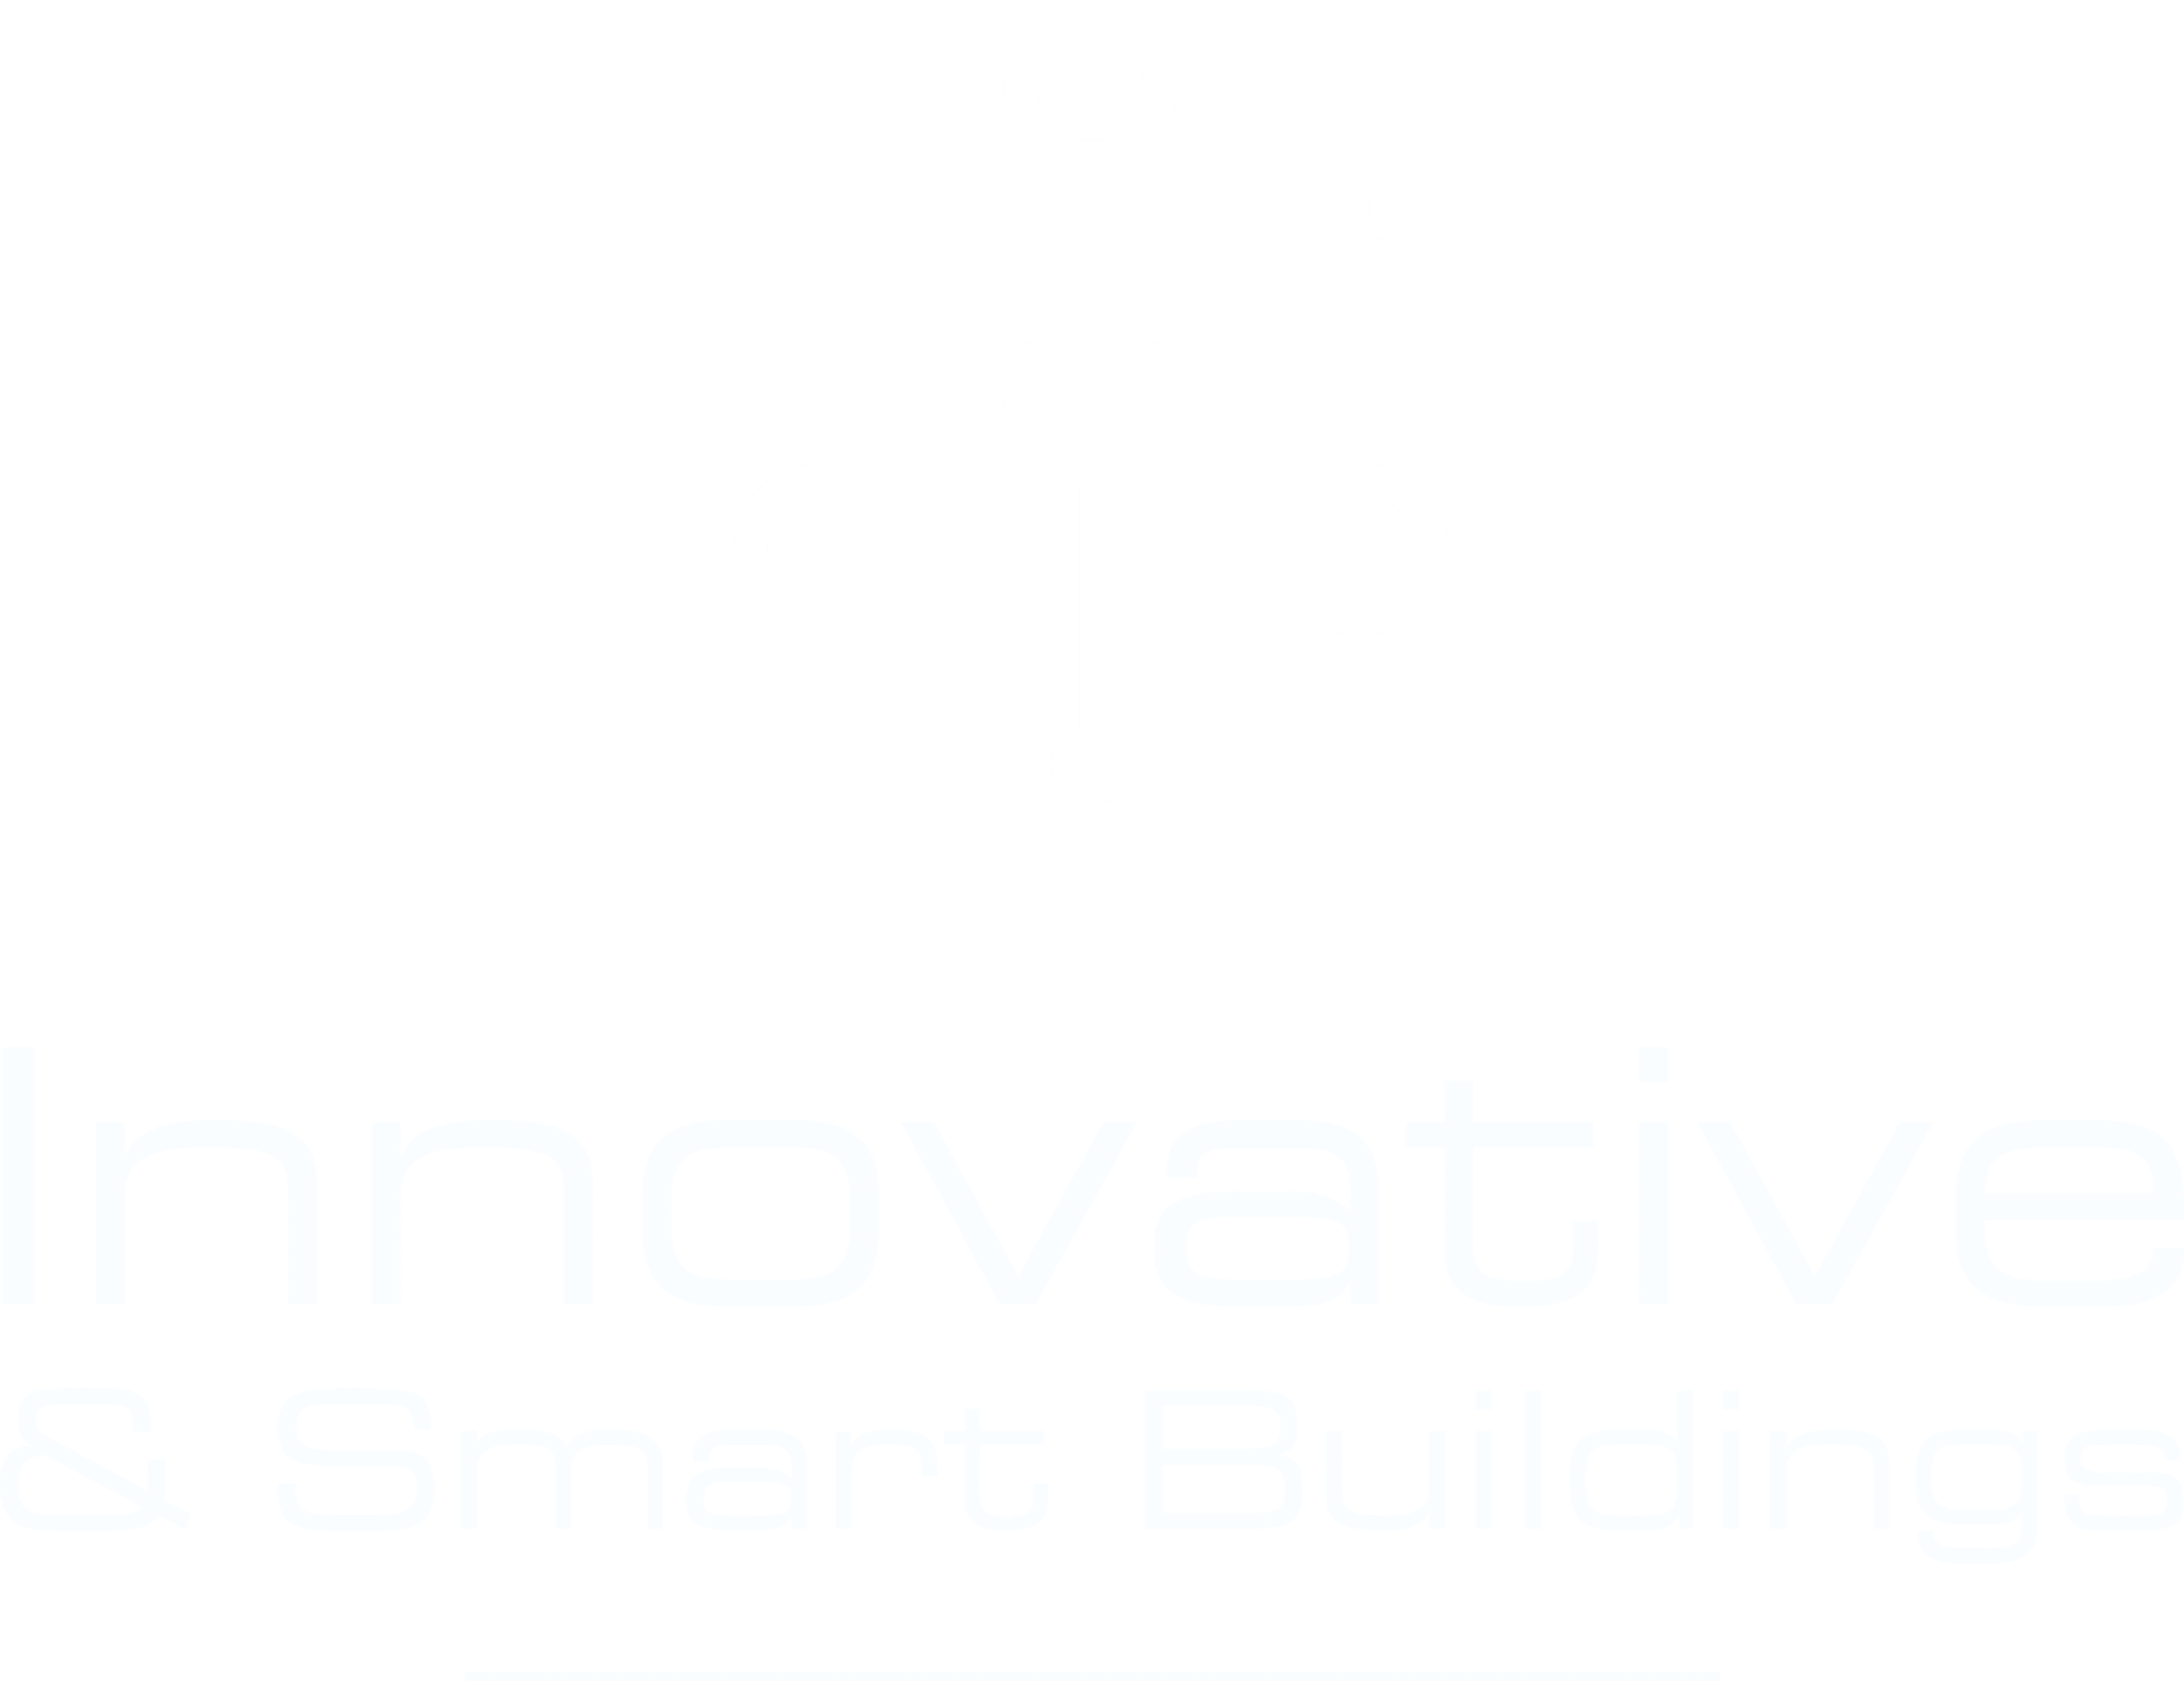 Innovative & smart building